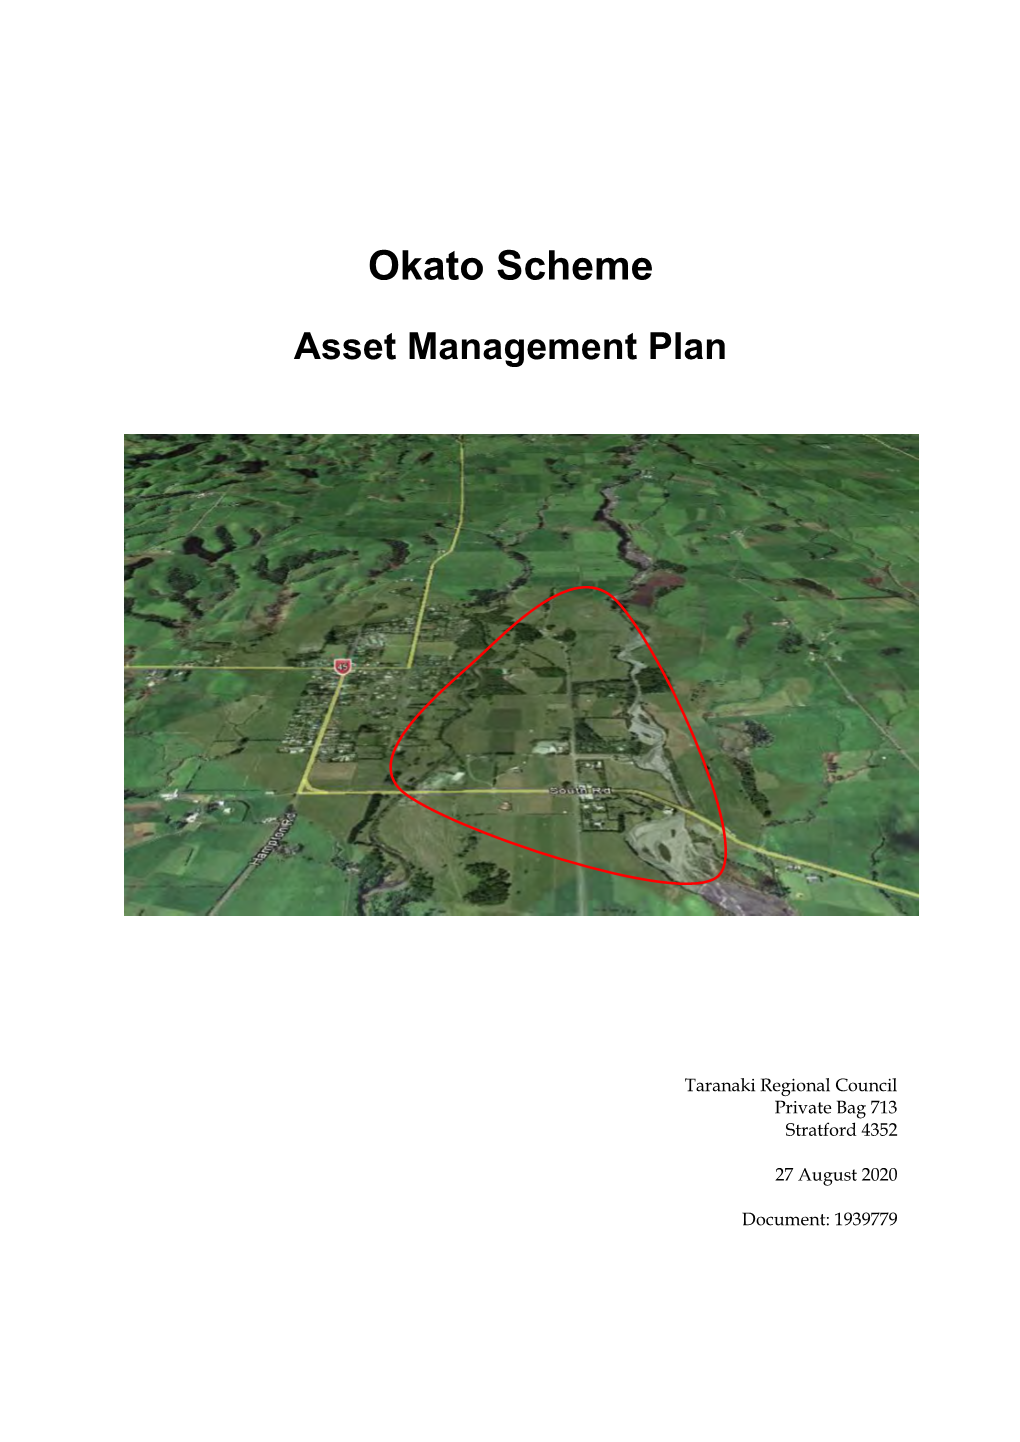 Ōkato Scheme Asset Management Plan